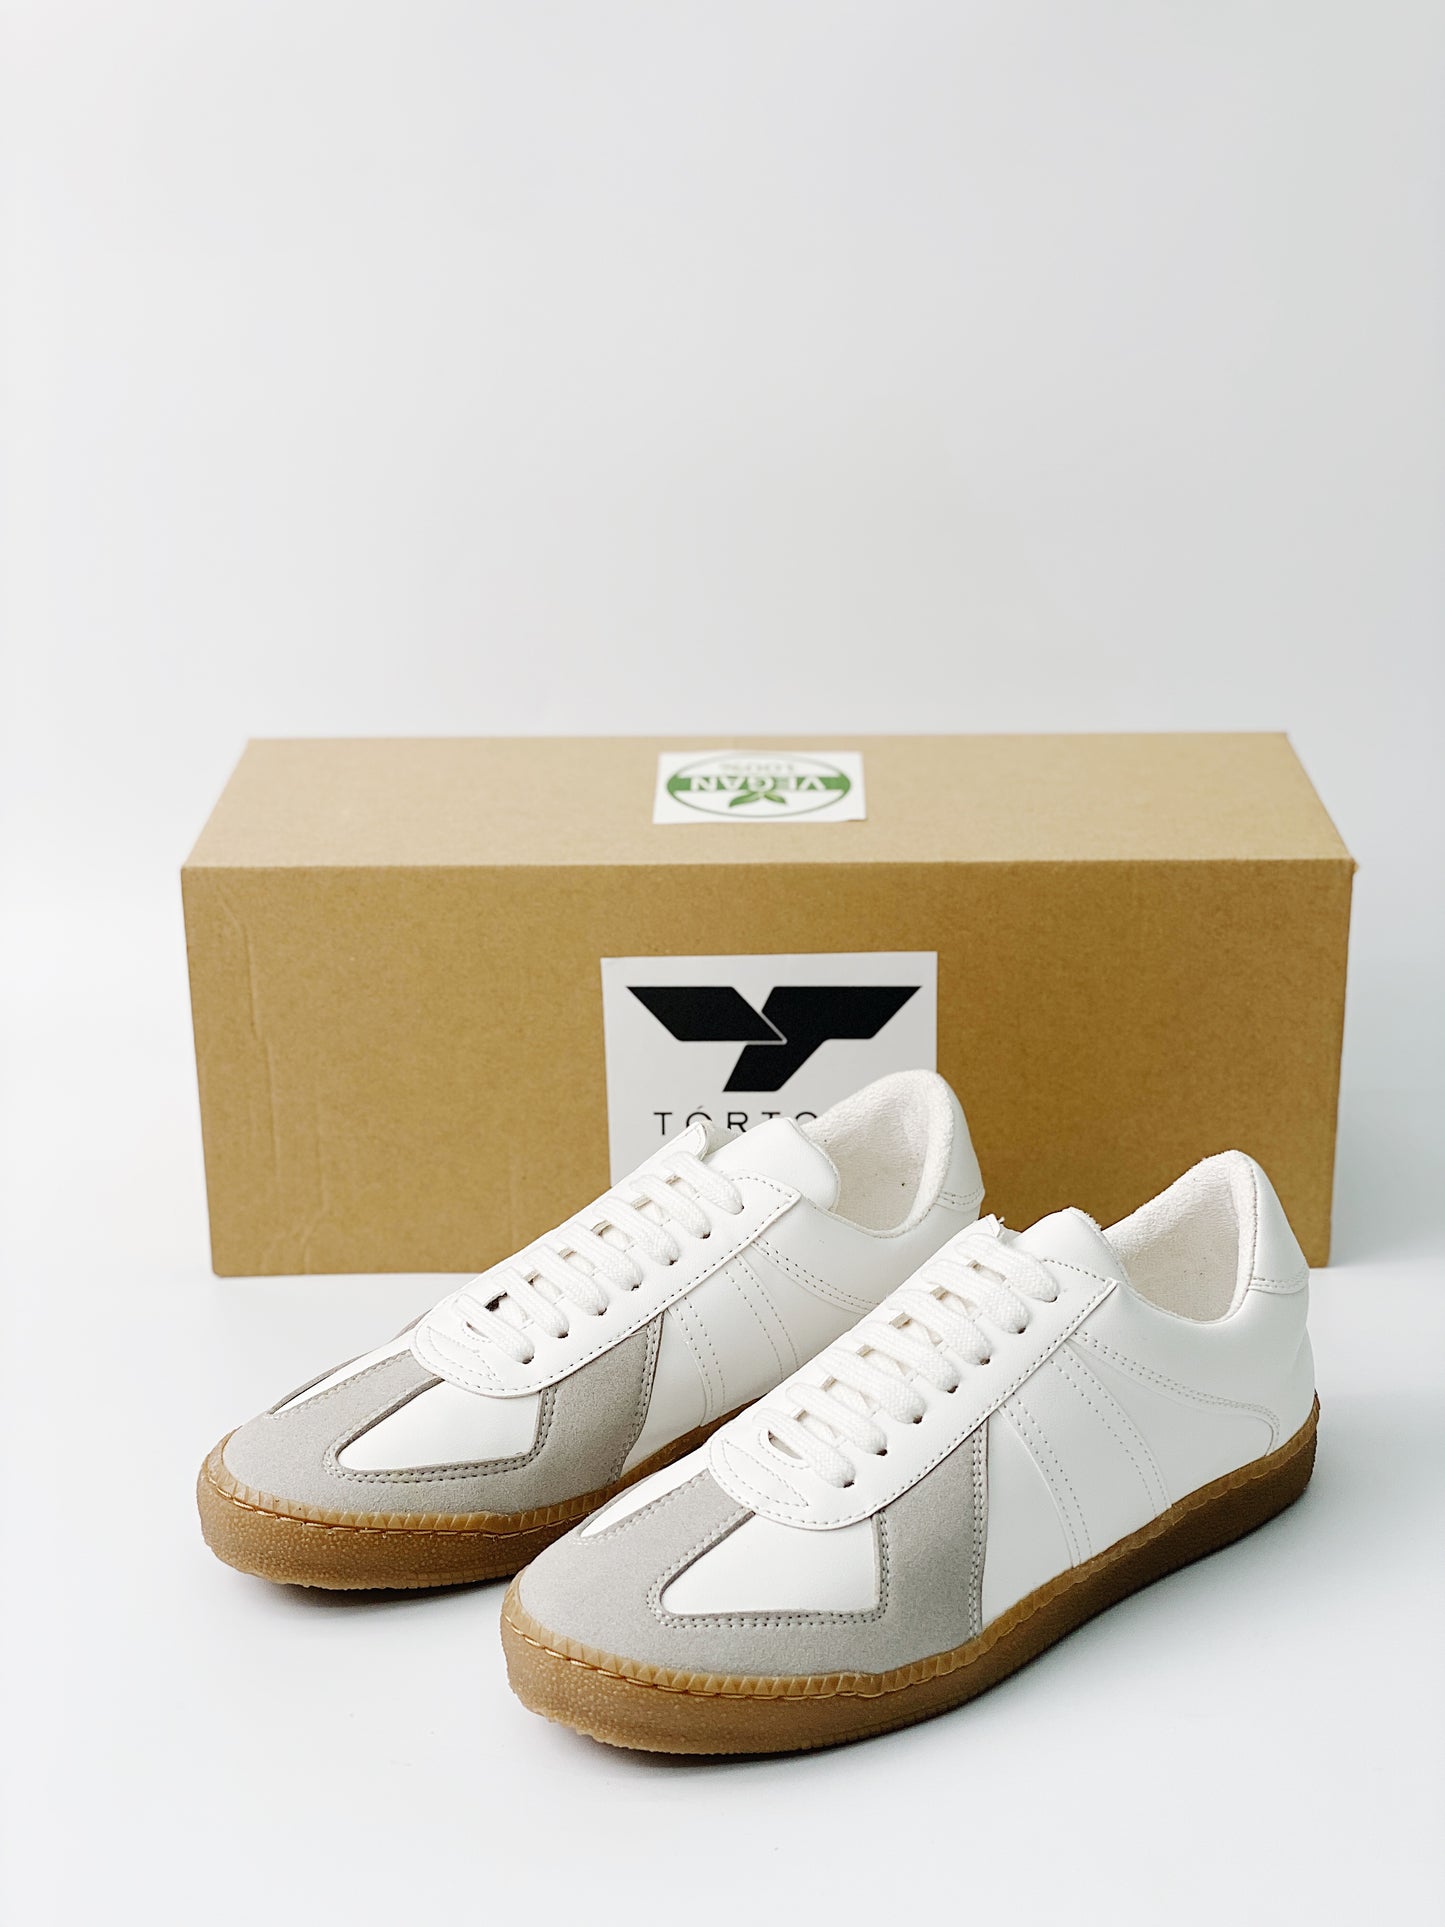 YEARS X QUARTER 416 - Vegancraft 100% Vegan German Army Trainer Shoes Made In Spain (White)